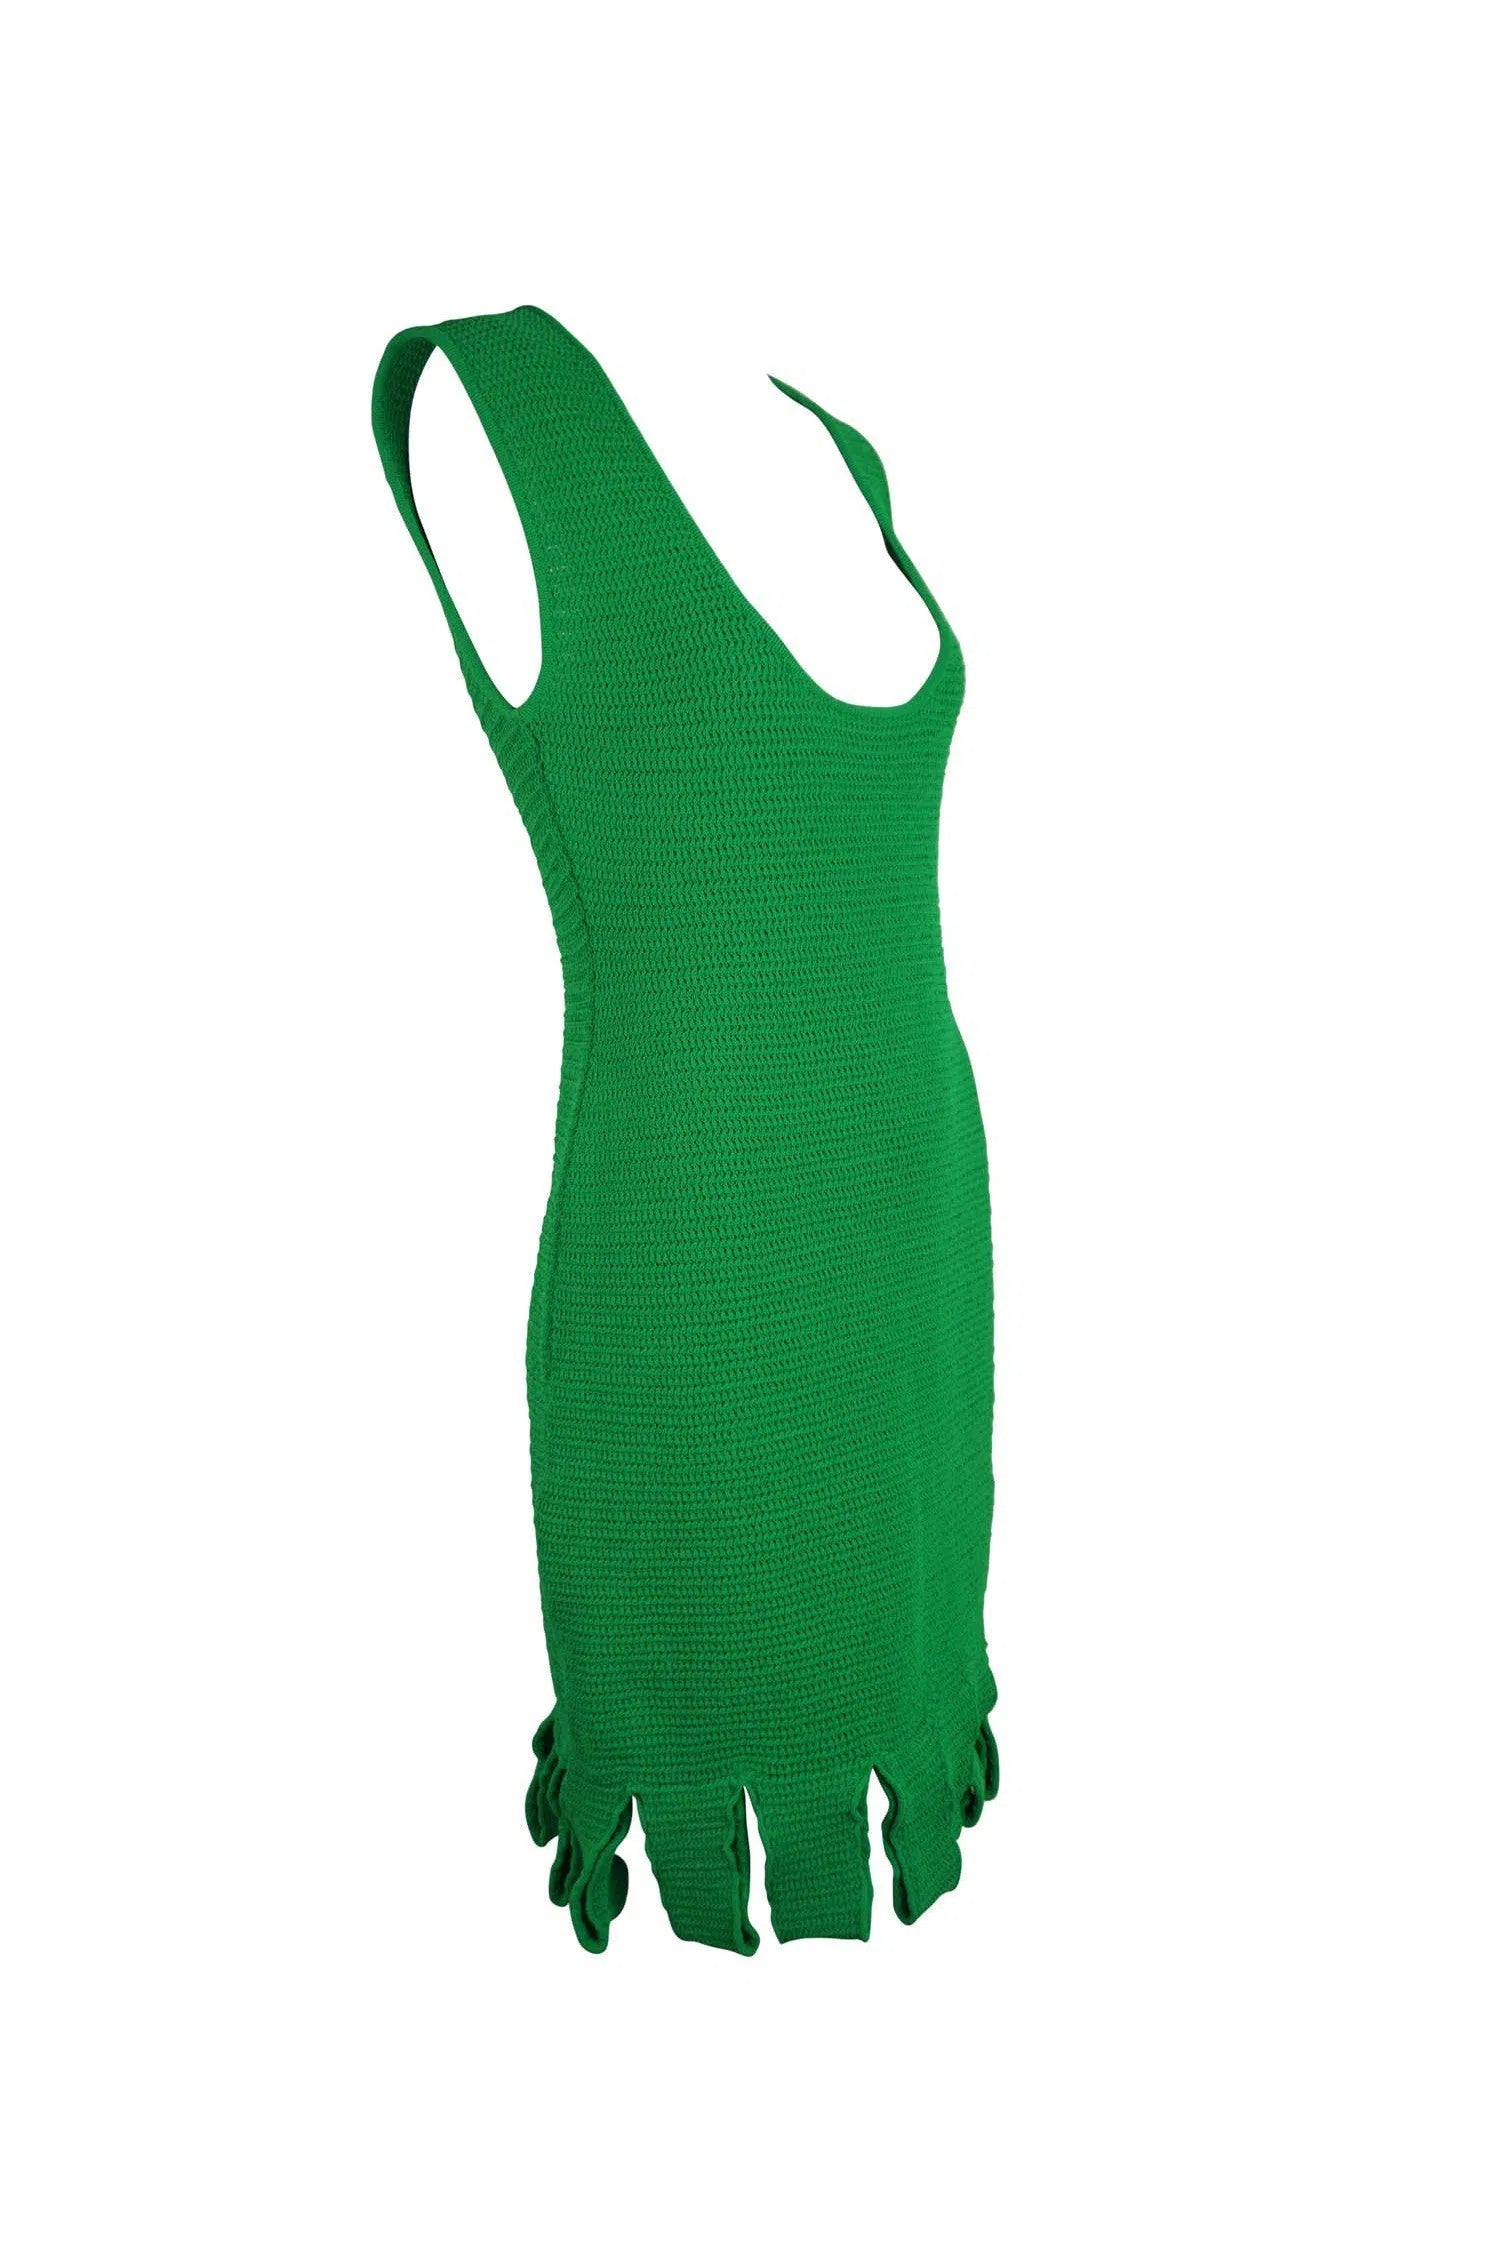 Bottega Veneta Green Knit Tank Dress